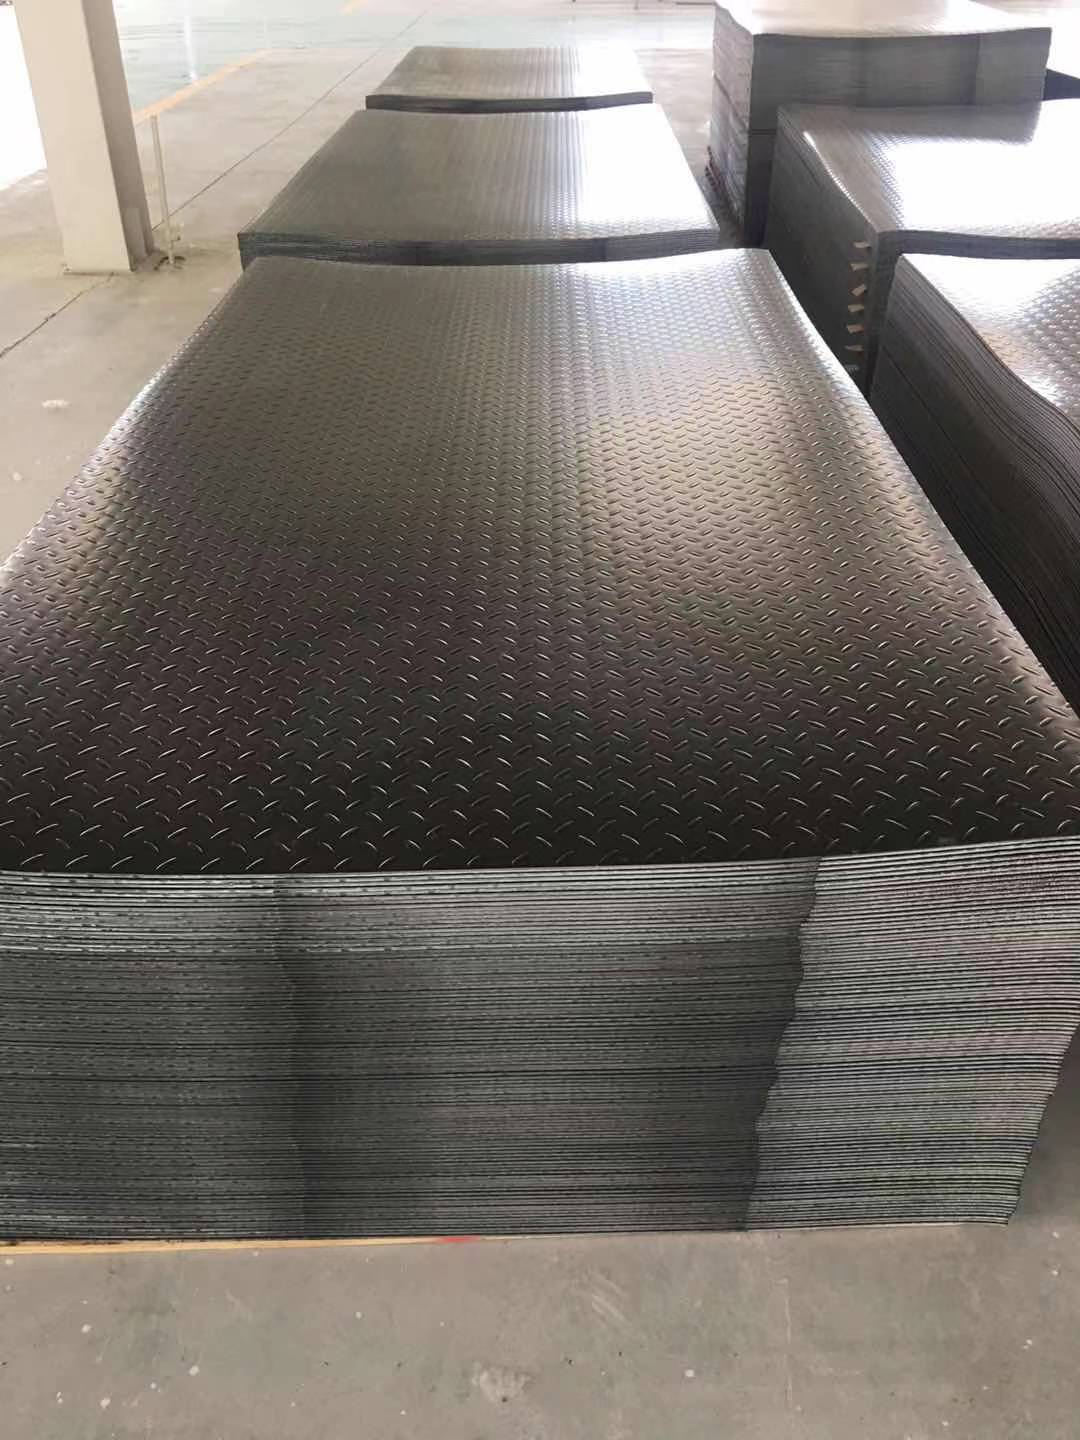 HDPE plastic anti-slid textured floor tiles for livestock